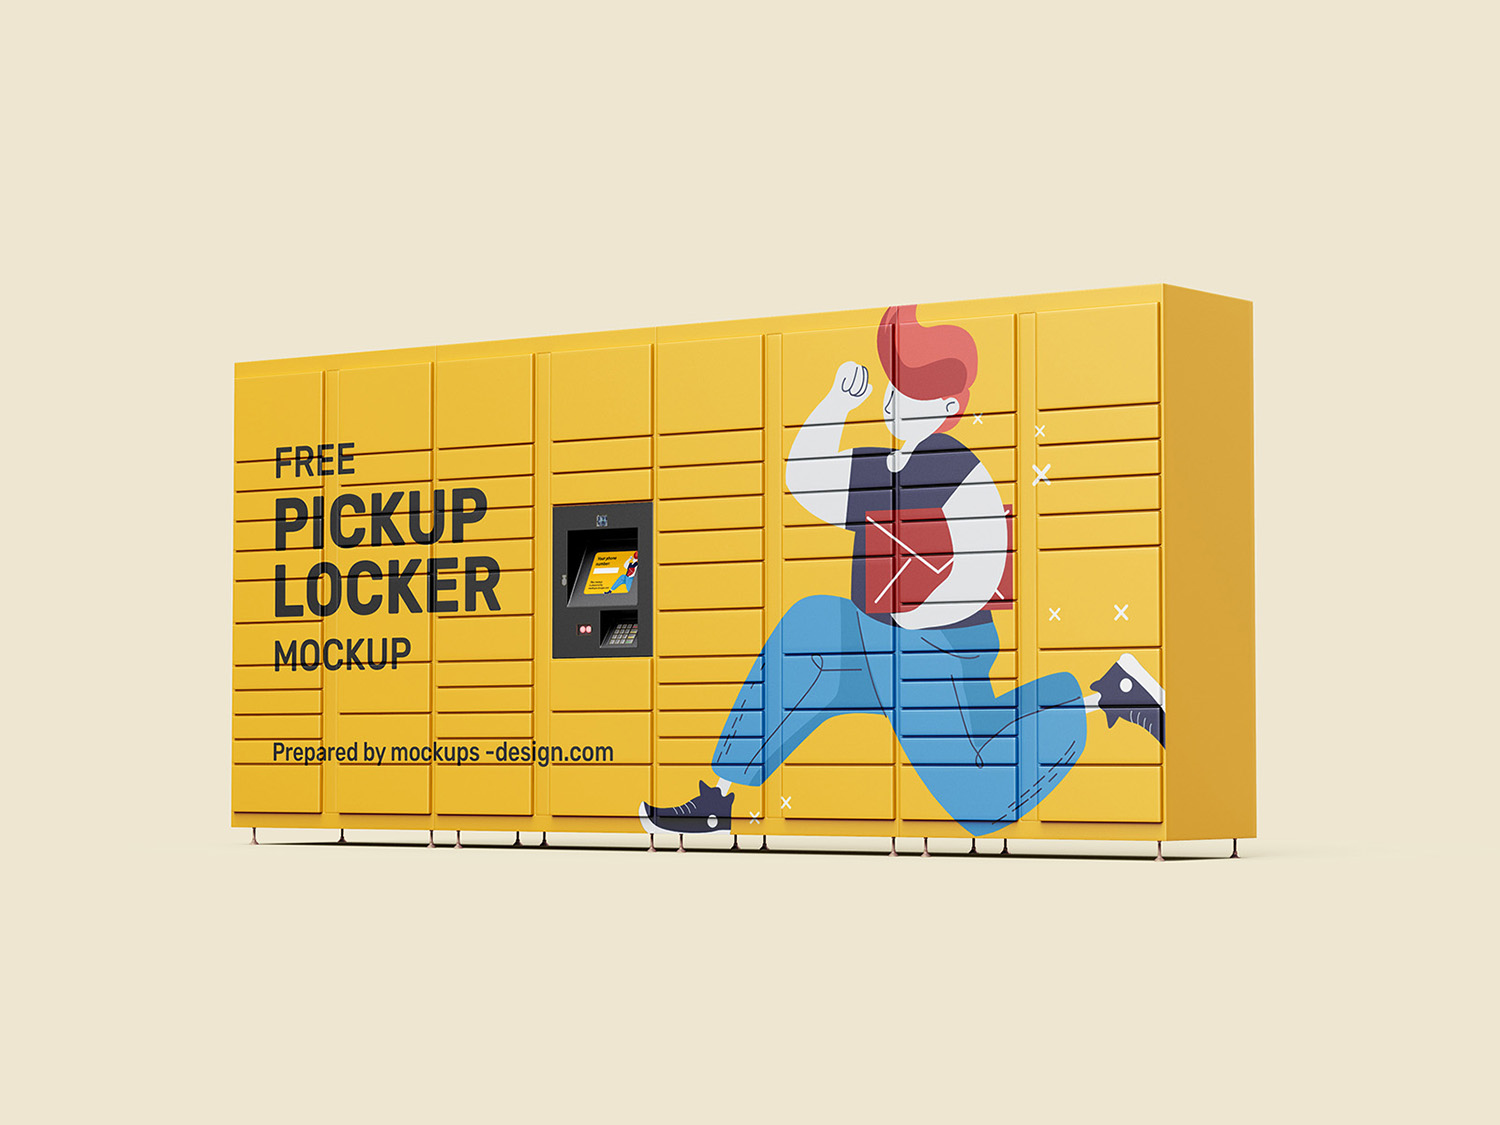 Free Pickup Locker Mockup